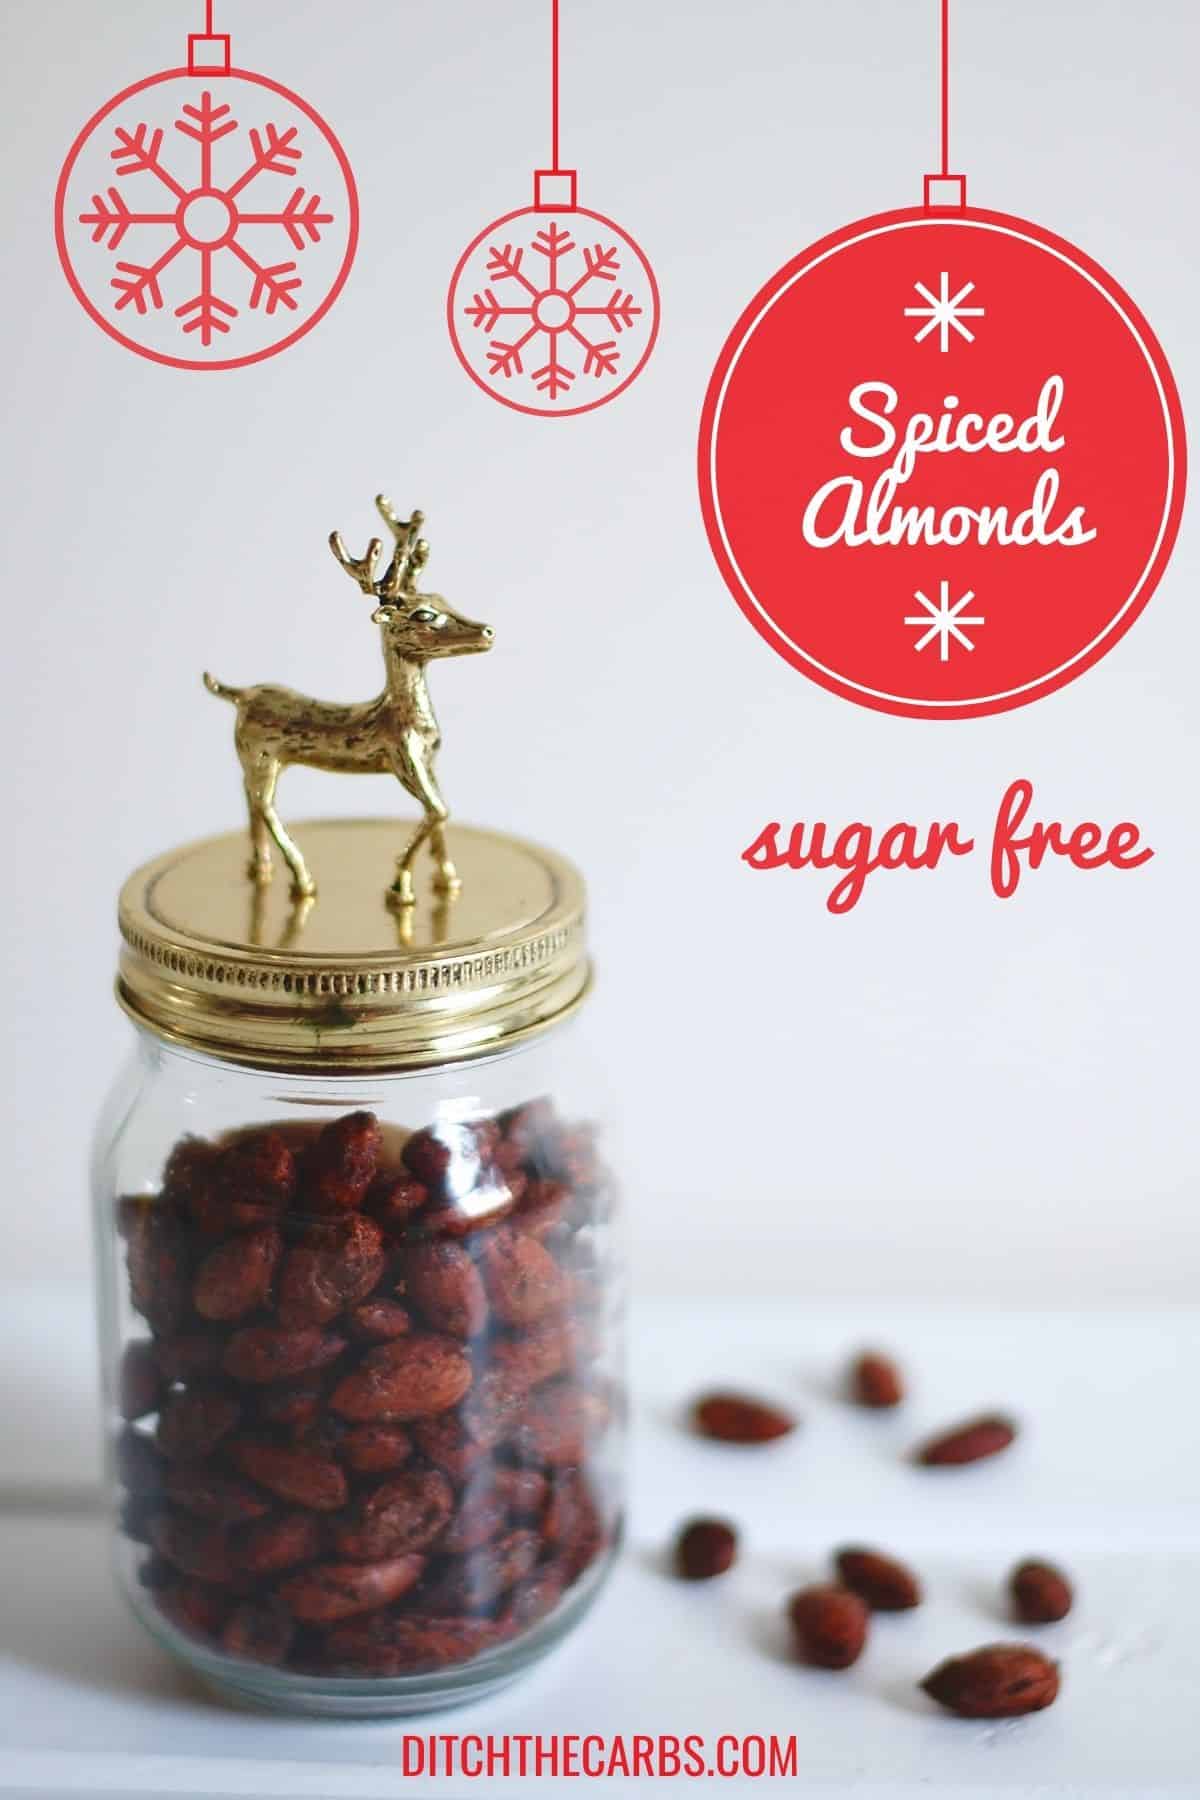 sugar-free candied almonds in a glass jar